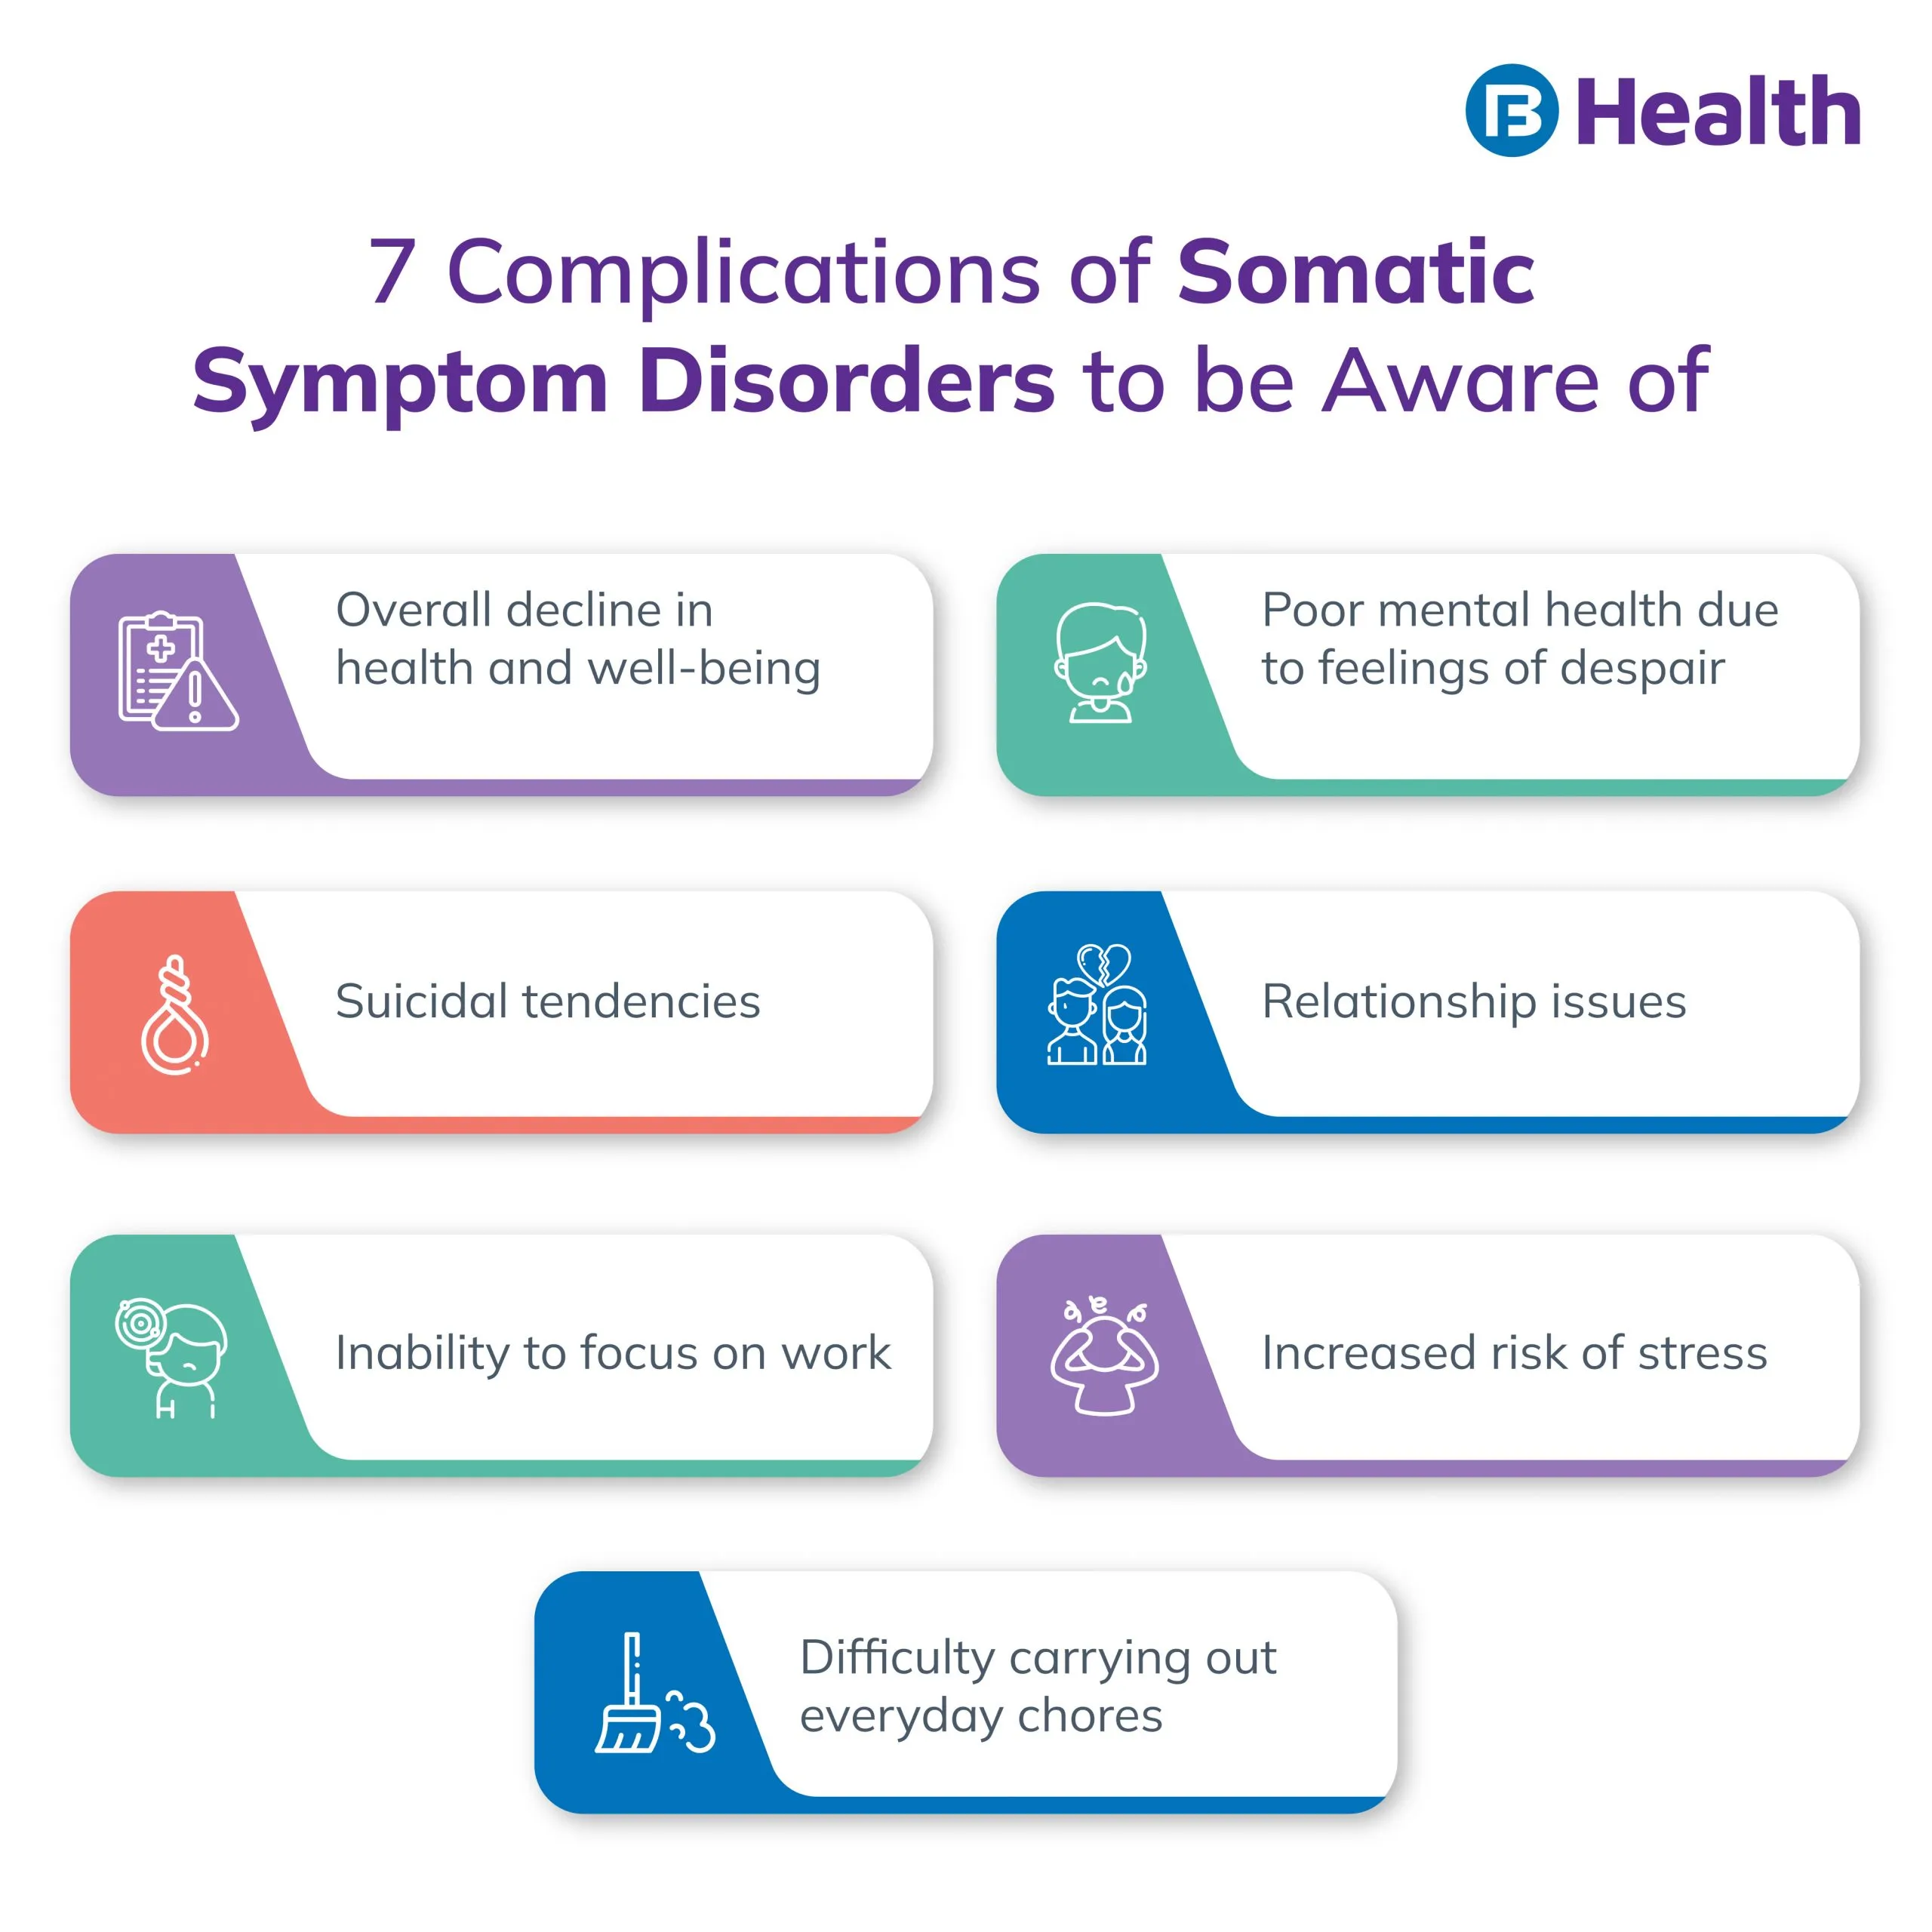 Complications of Somatic Symptom Disorders